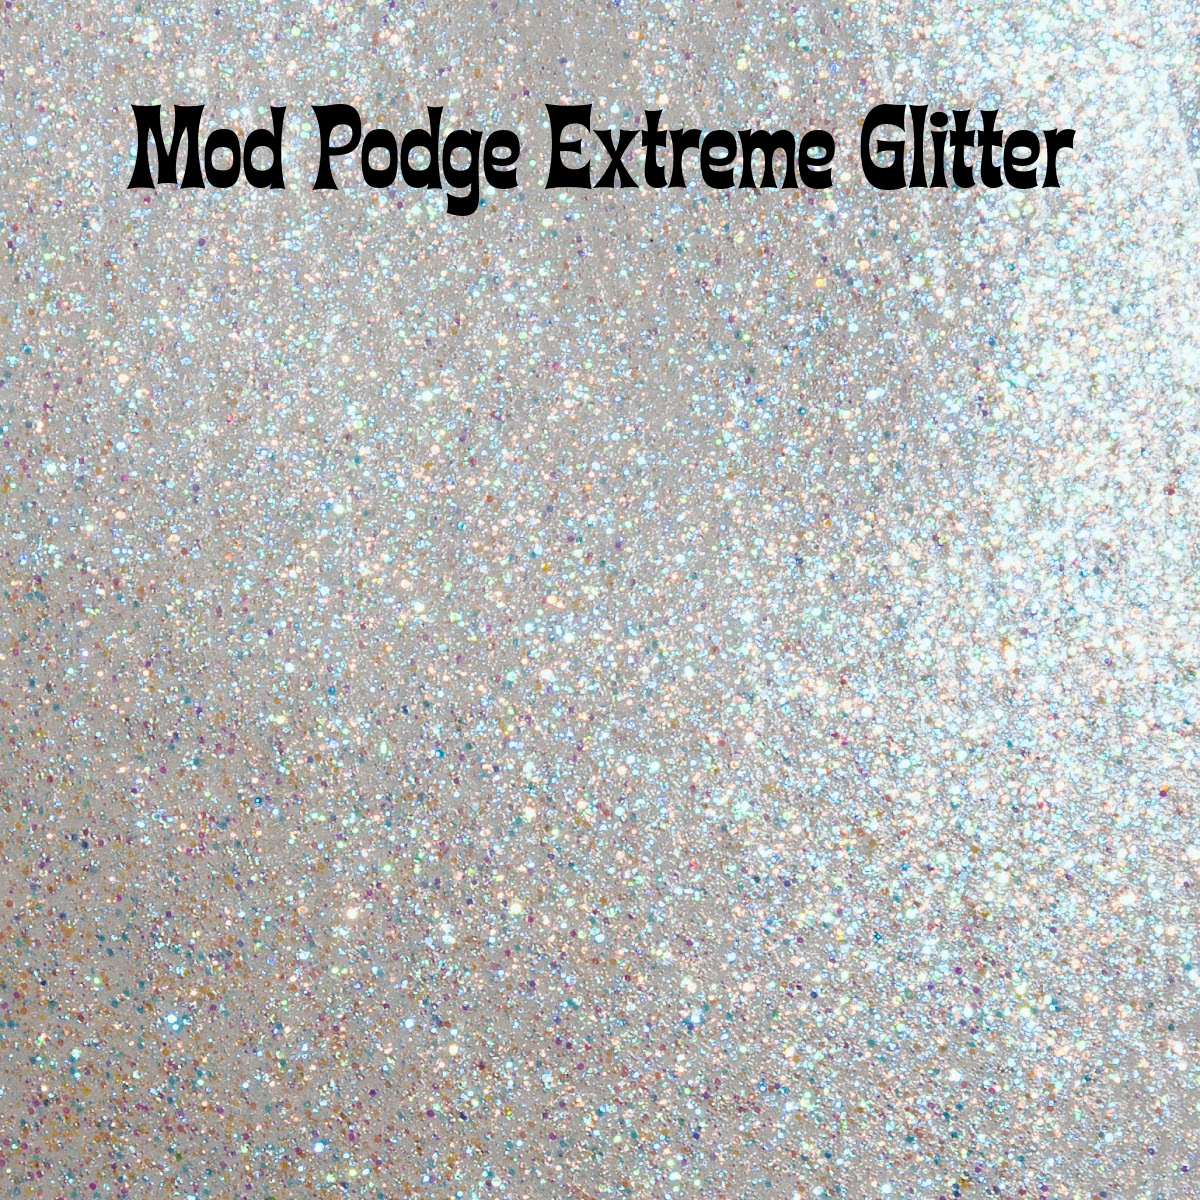 Mod Podge Extreme Glitter swatch